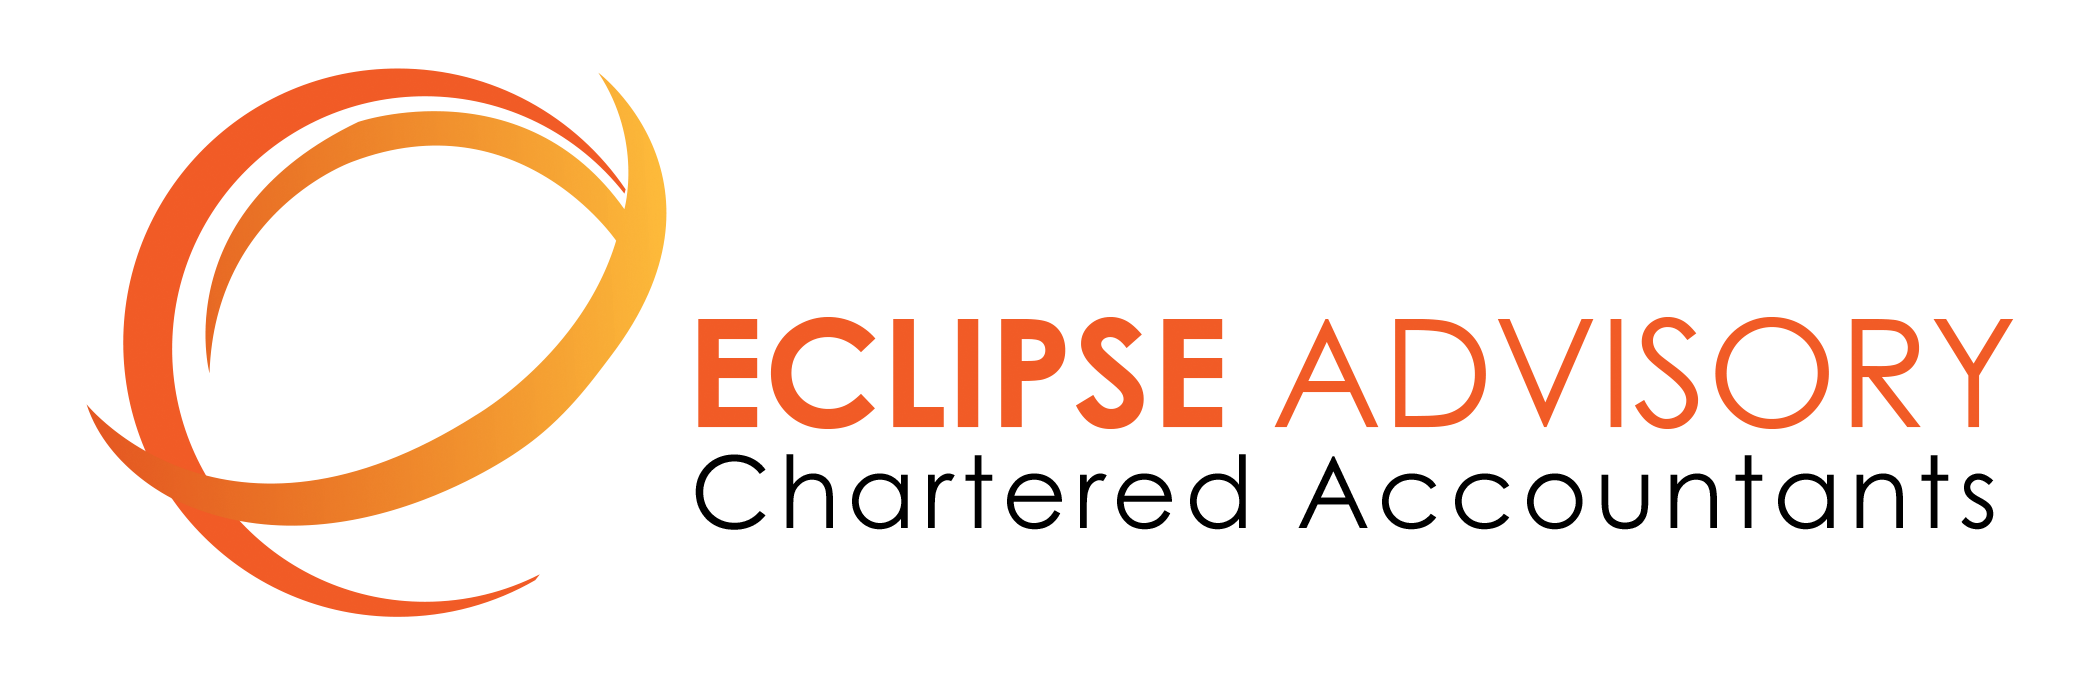 Eclipse Advisory